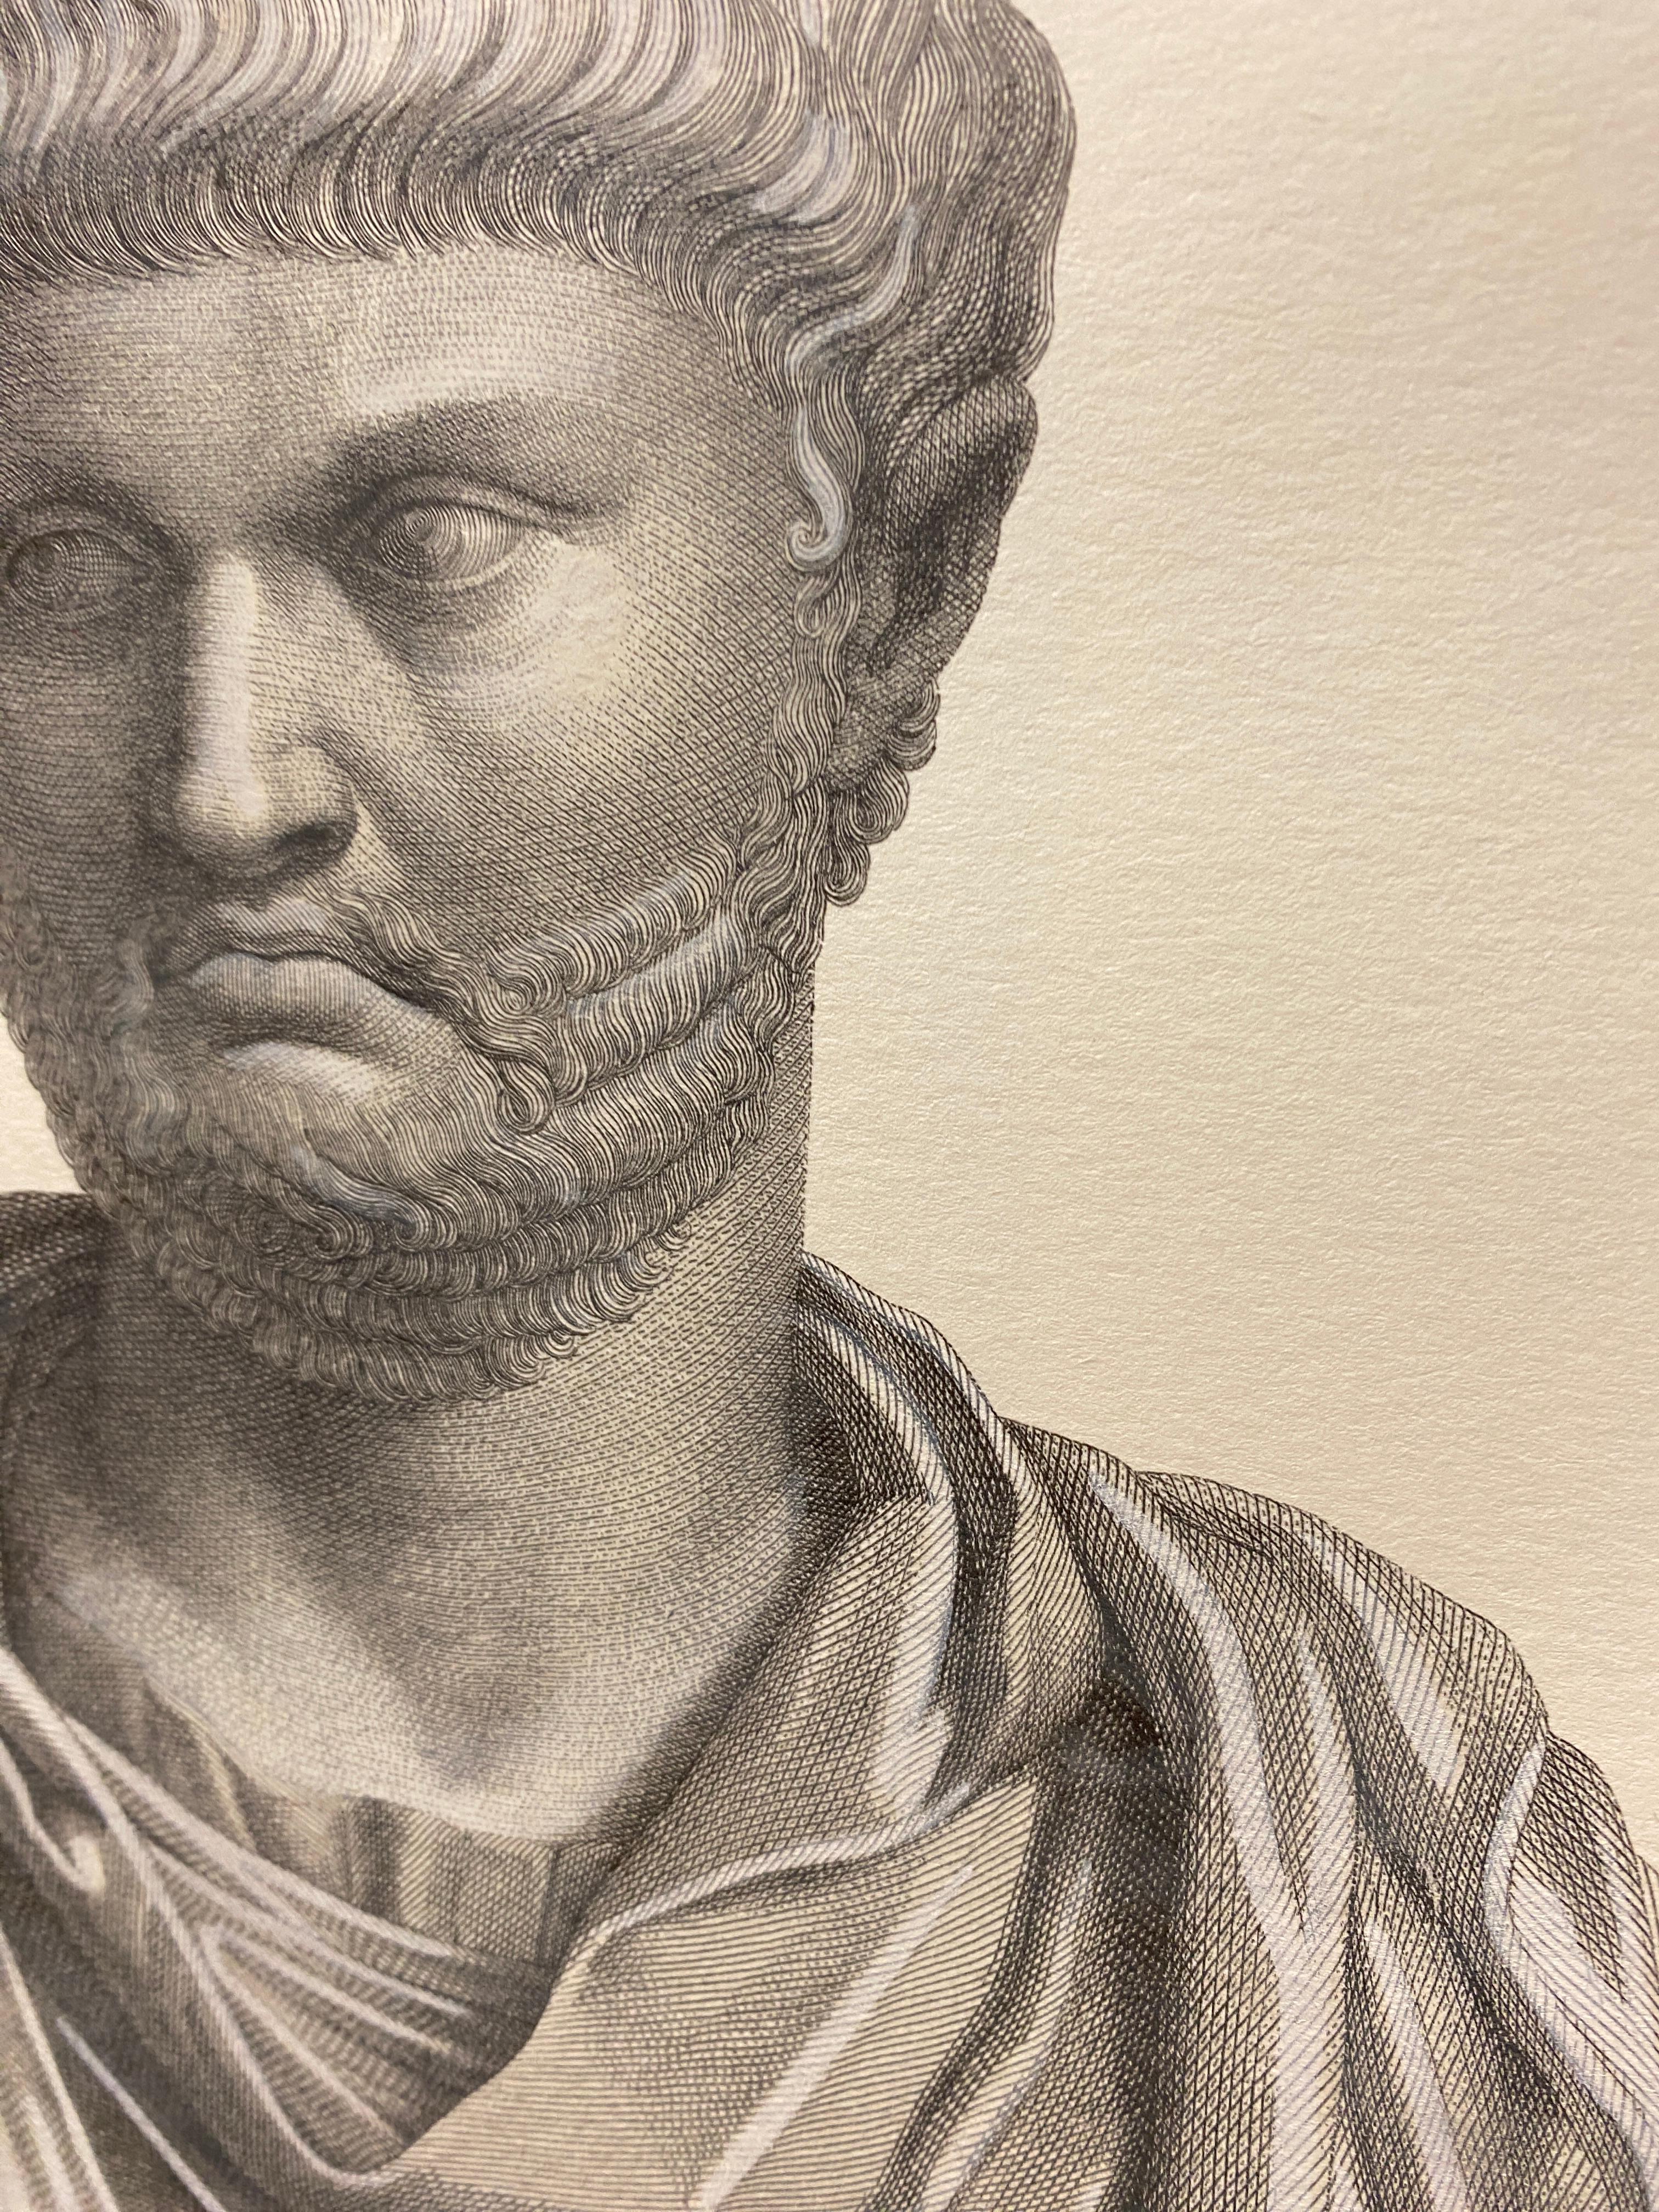 Paper Contemporary Italian Hand Printed Antique Roman Emperor Bust 